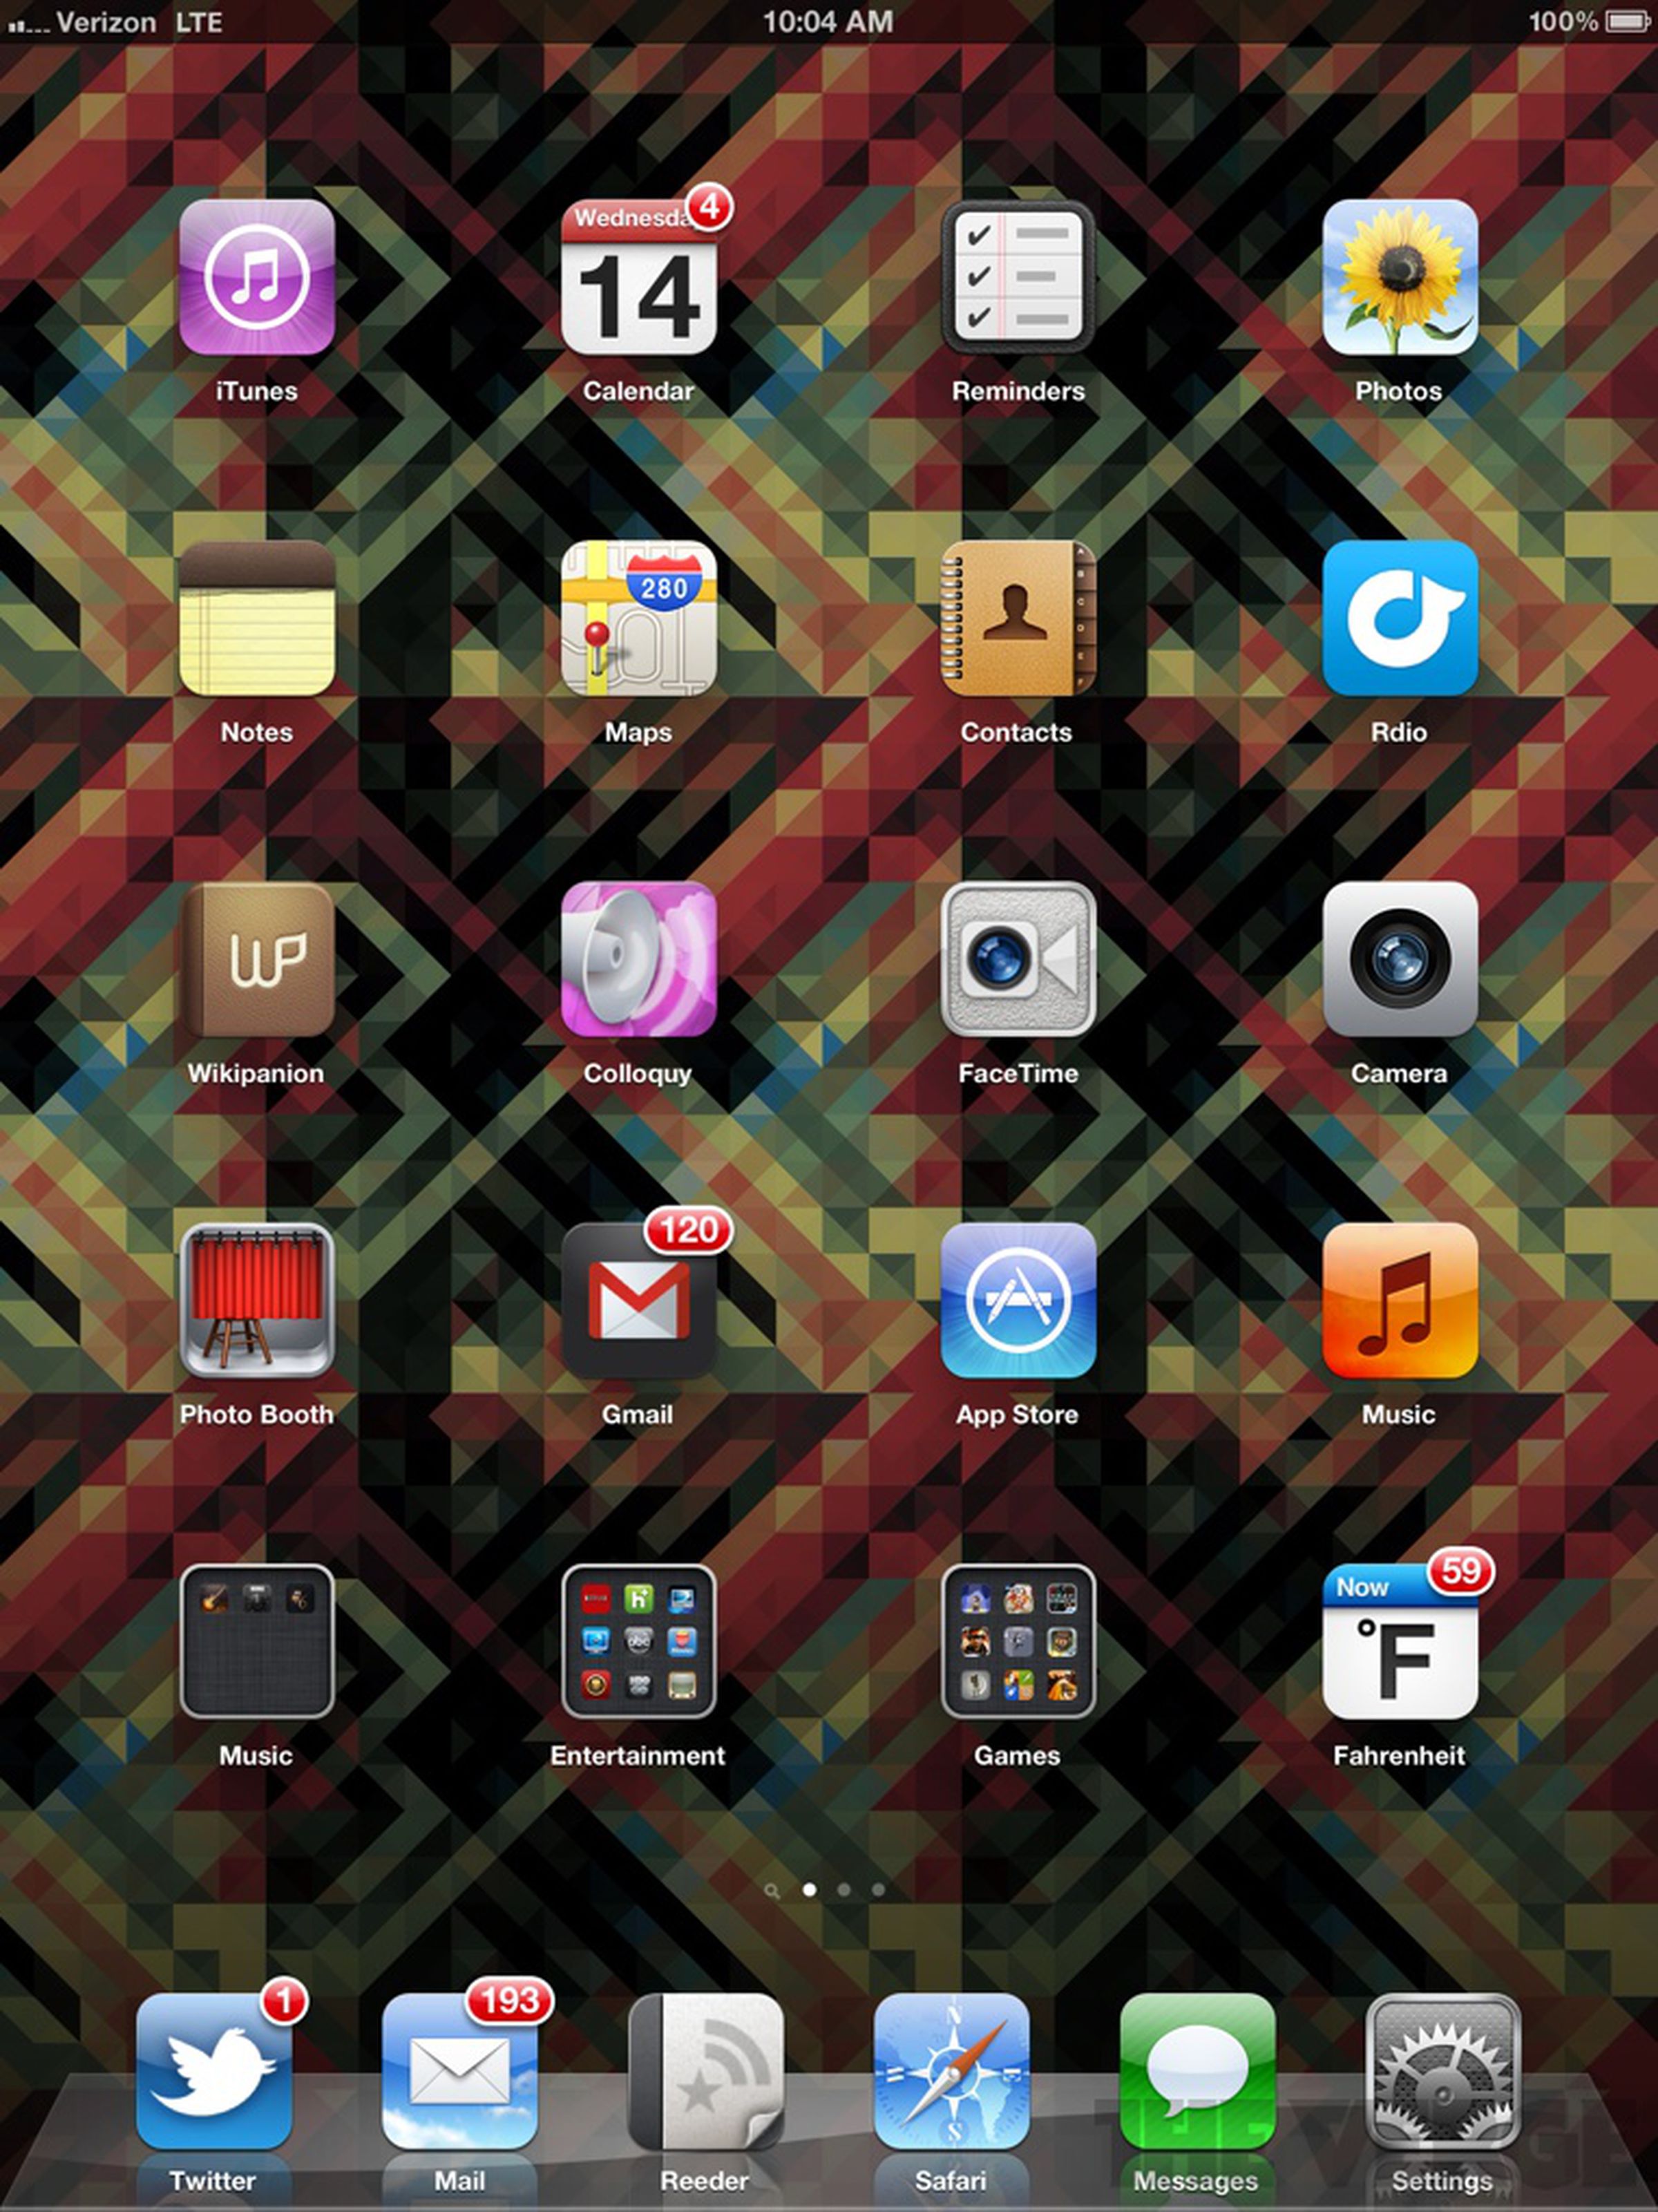 iPad review software screenshots